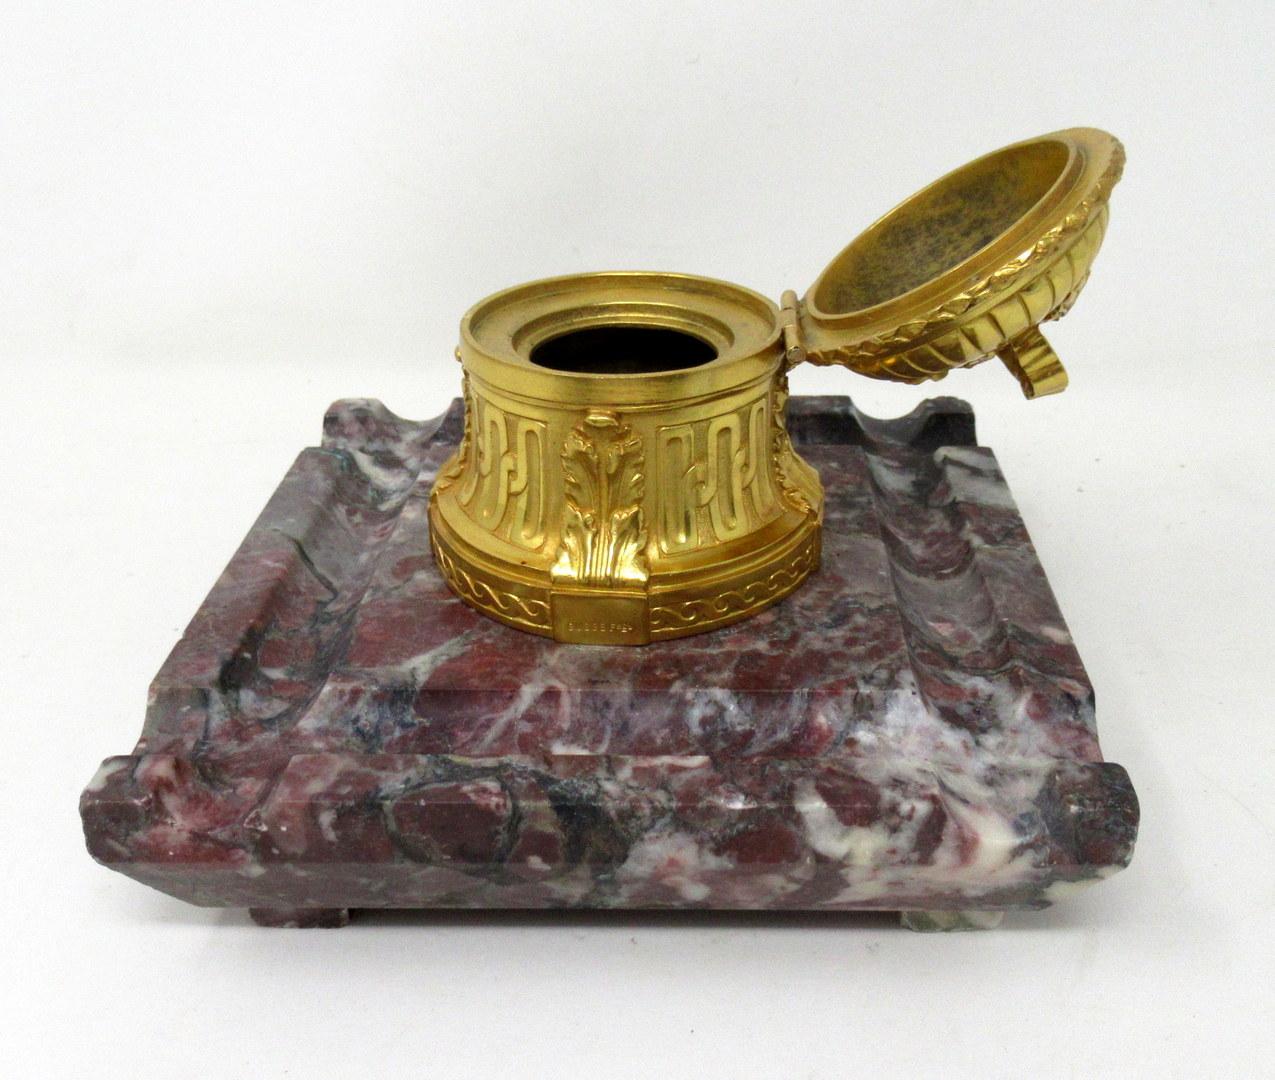 Grand Tour Antique French Ormolu Gilt Bronze Breche Violete Marble Desk Inkwell Centerpiece